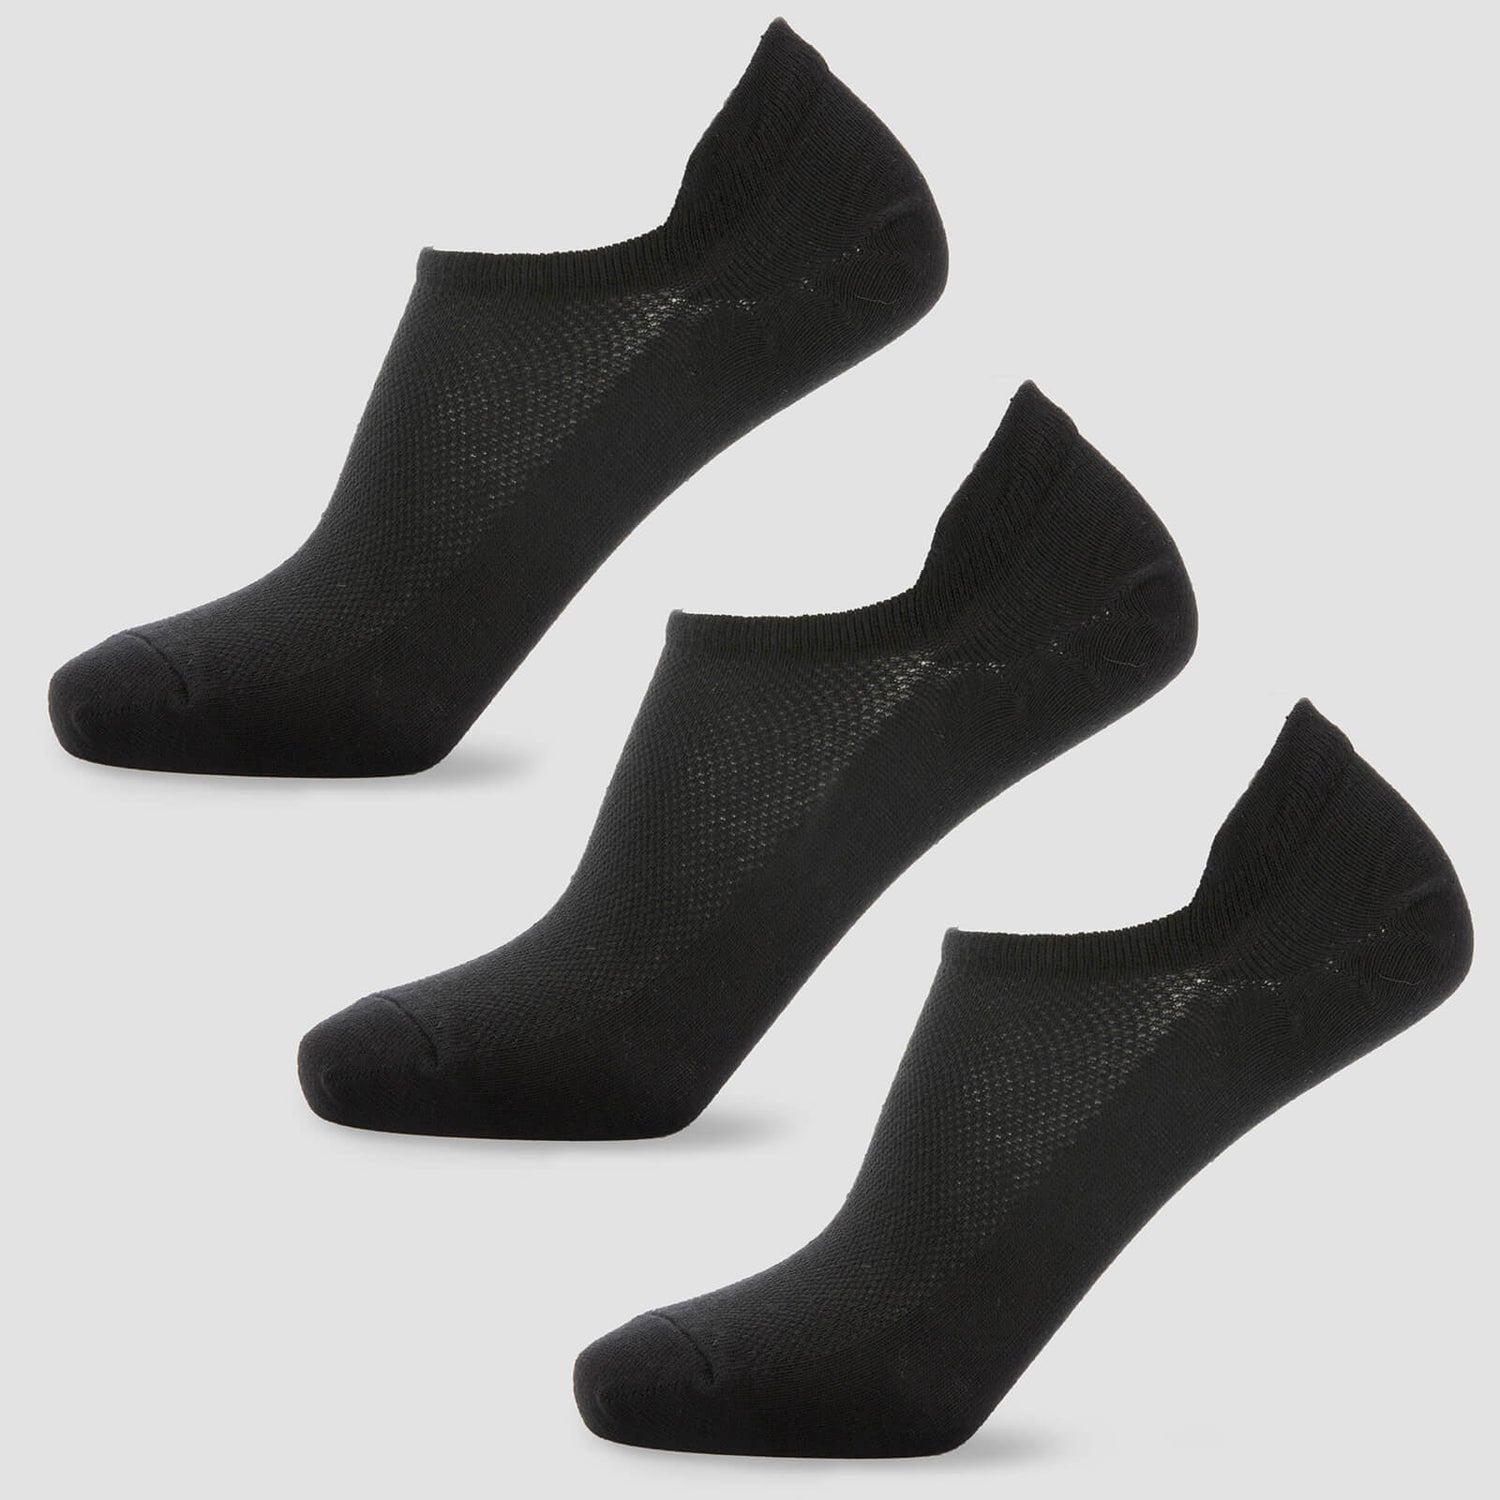 Women's Ankle Socks - Schwarz - UK 3-6